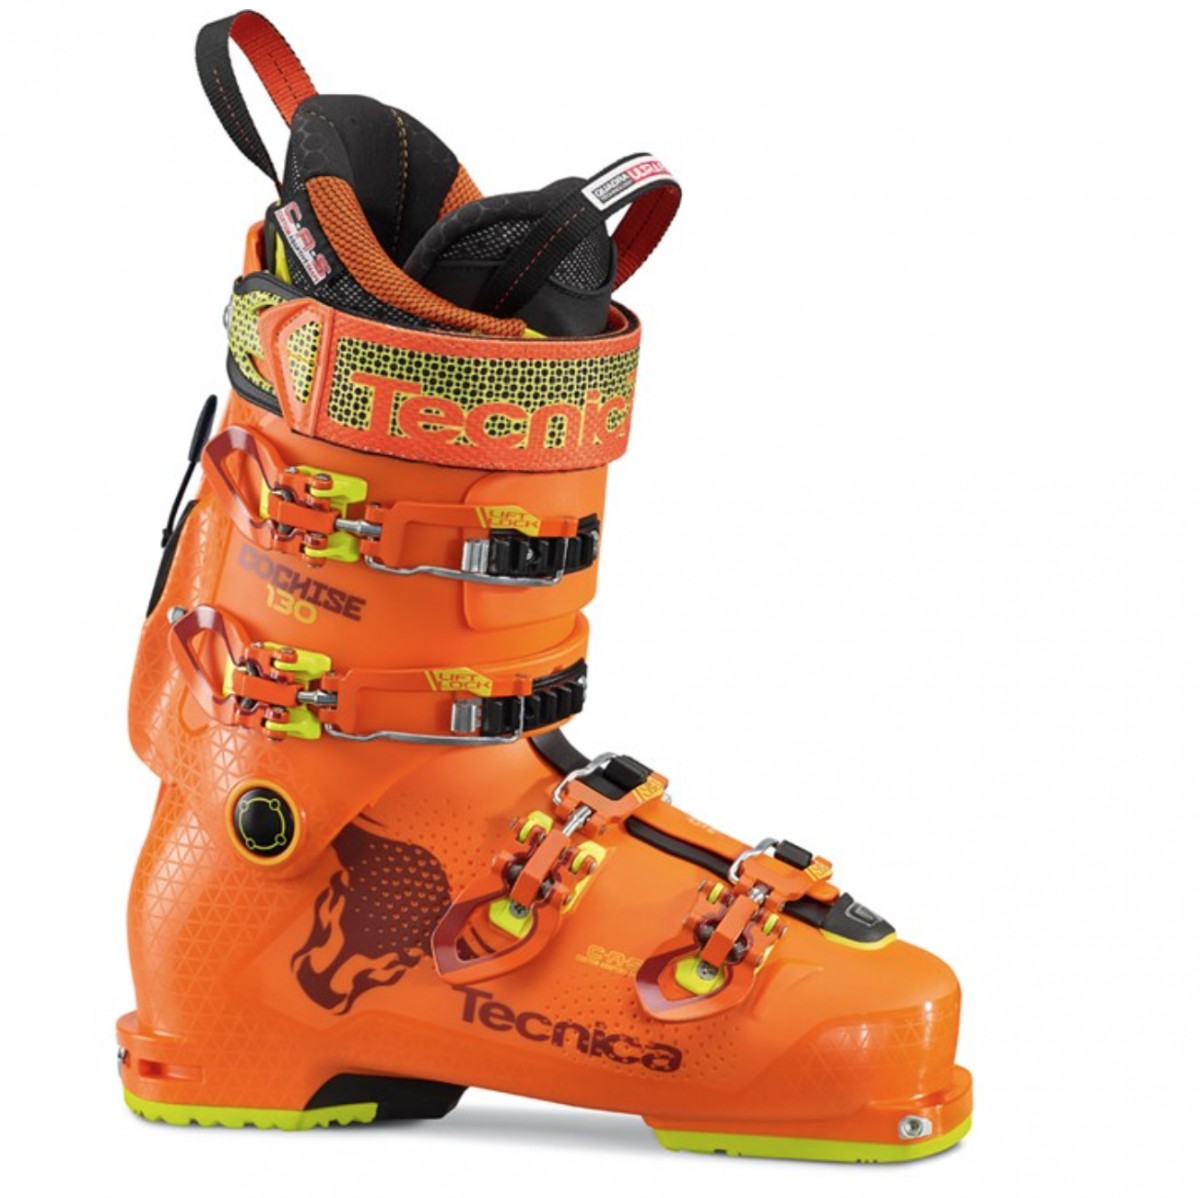 tecnica cochise pro 130 ski boots review